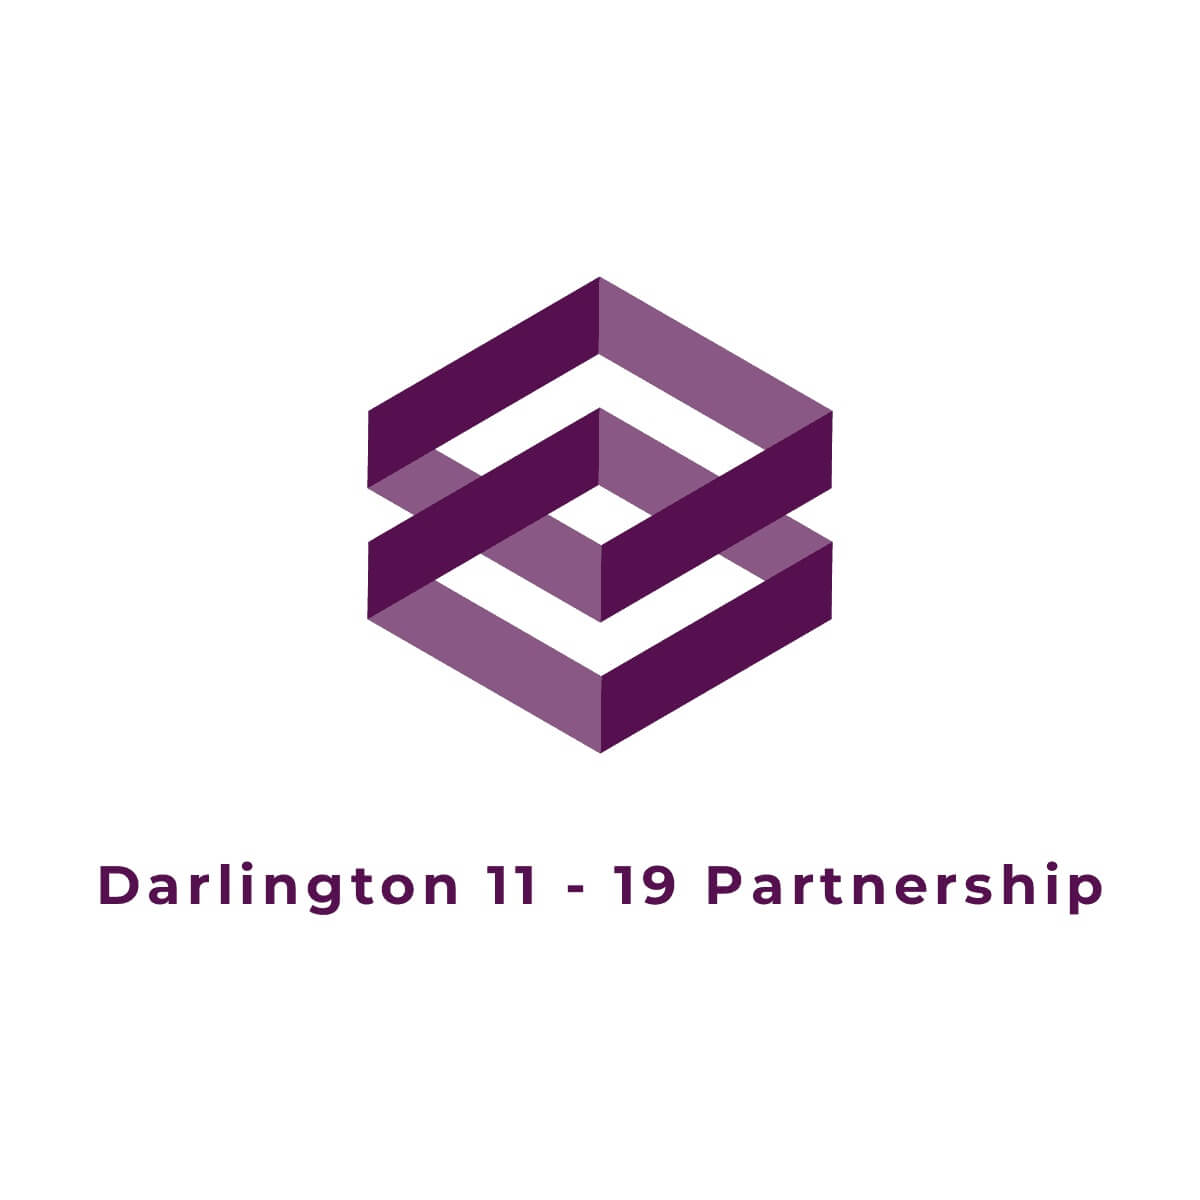 Darlington 11 - 19 Partnership Logo